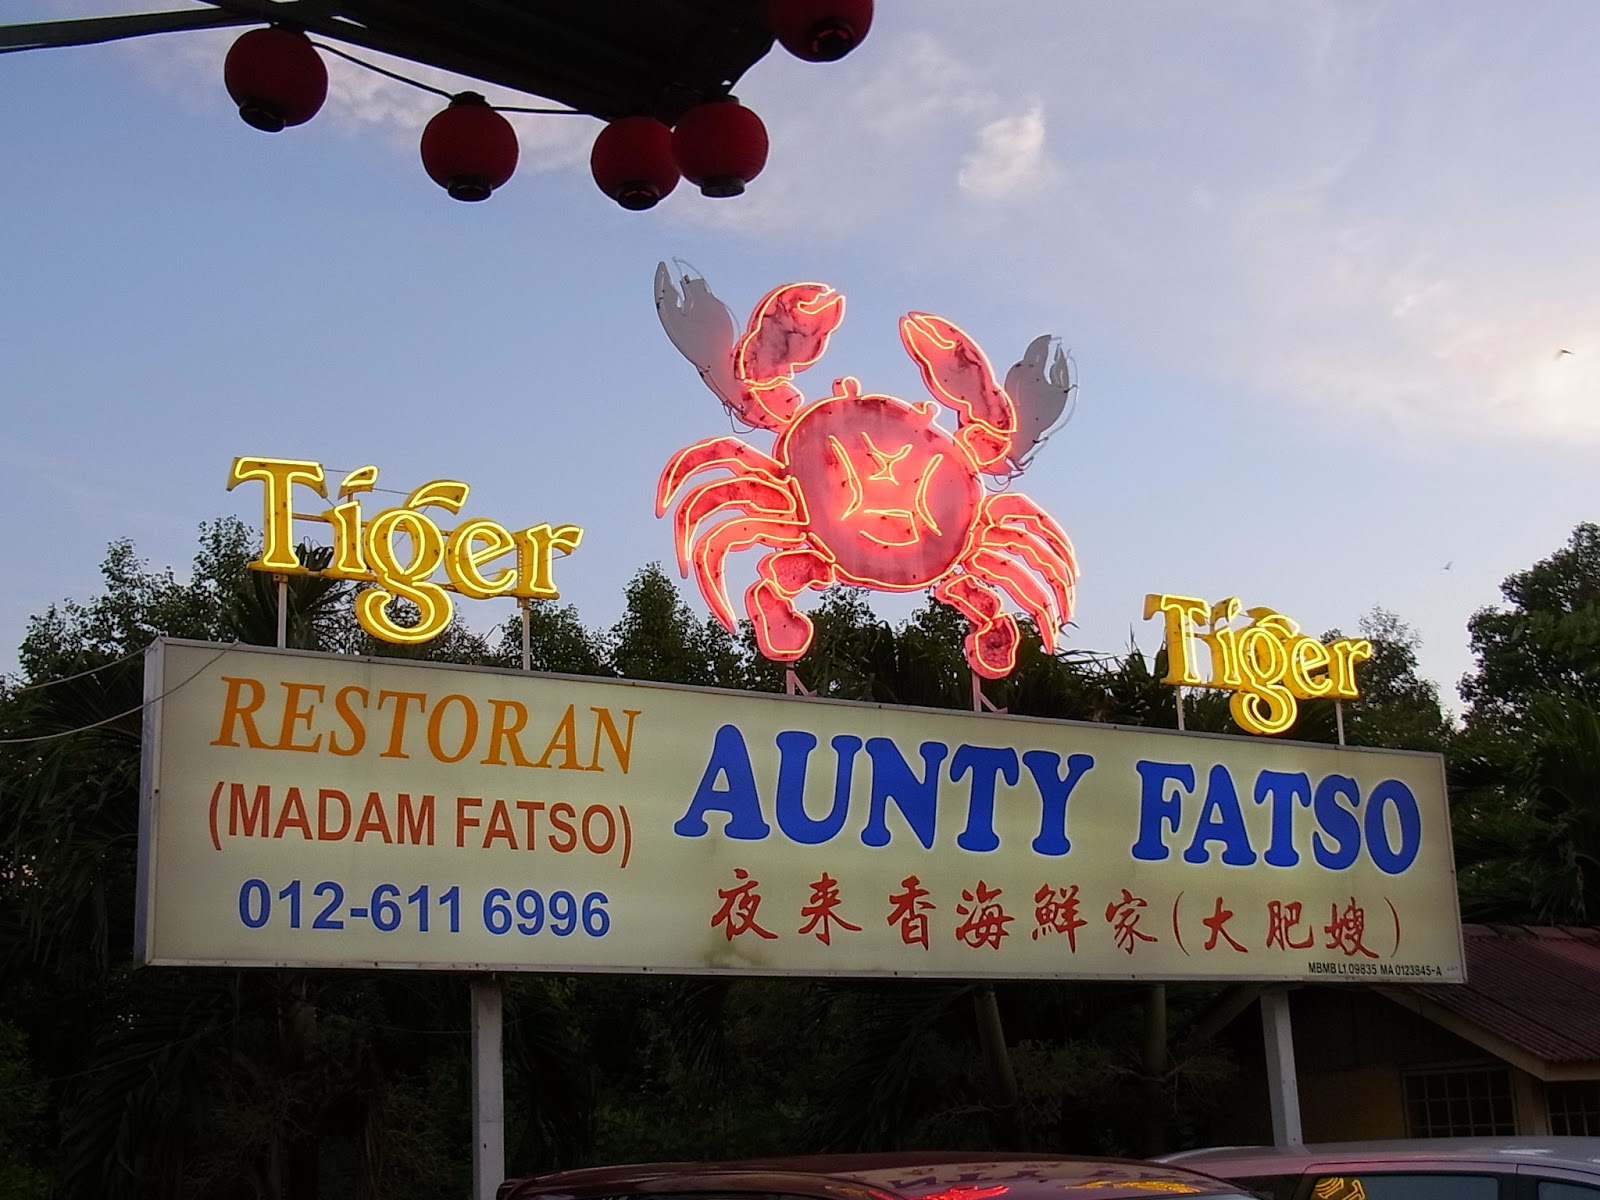 Aunty fatso restaurant